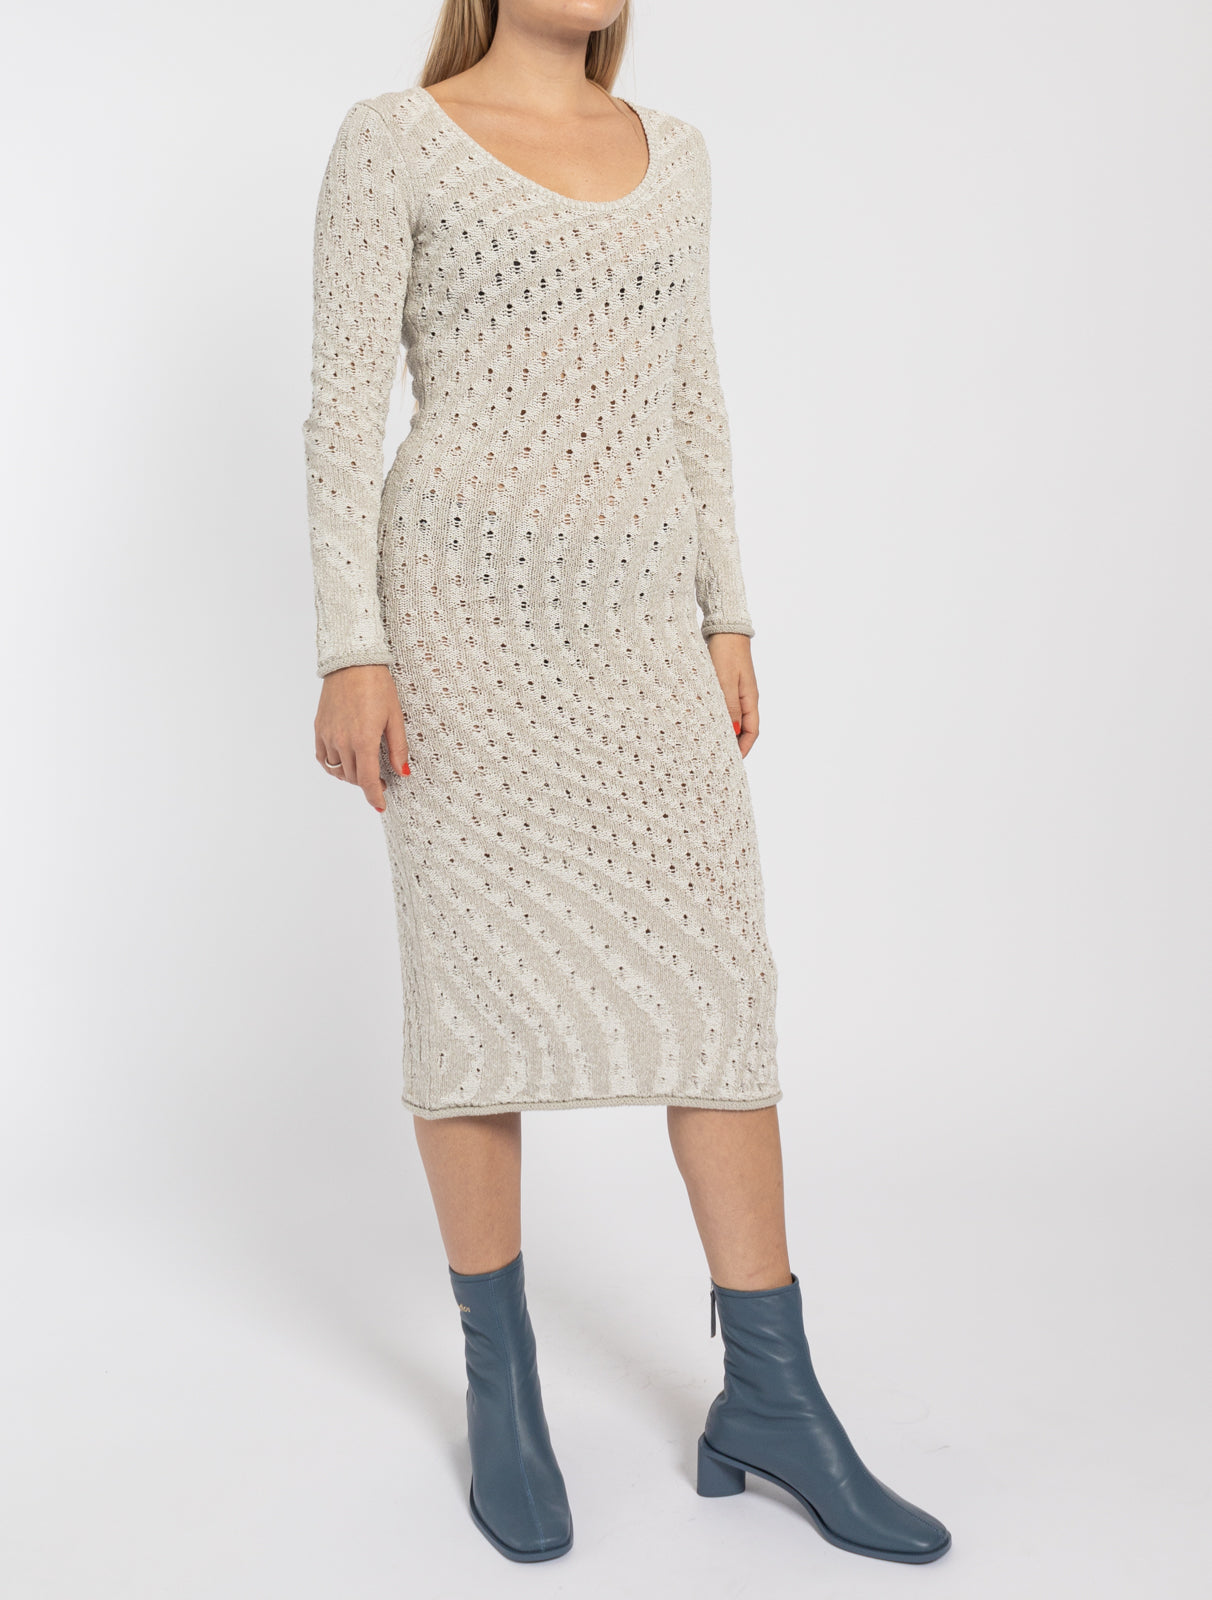 Jacquard Knit Dress